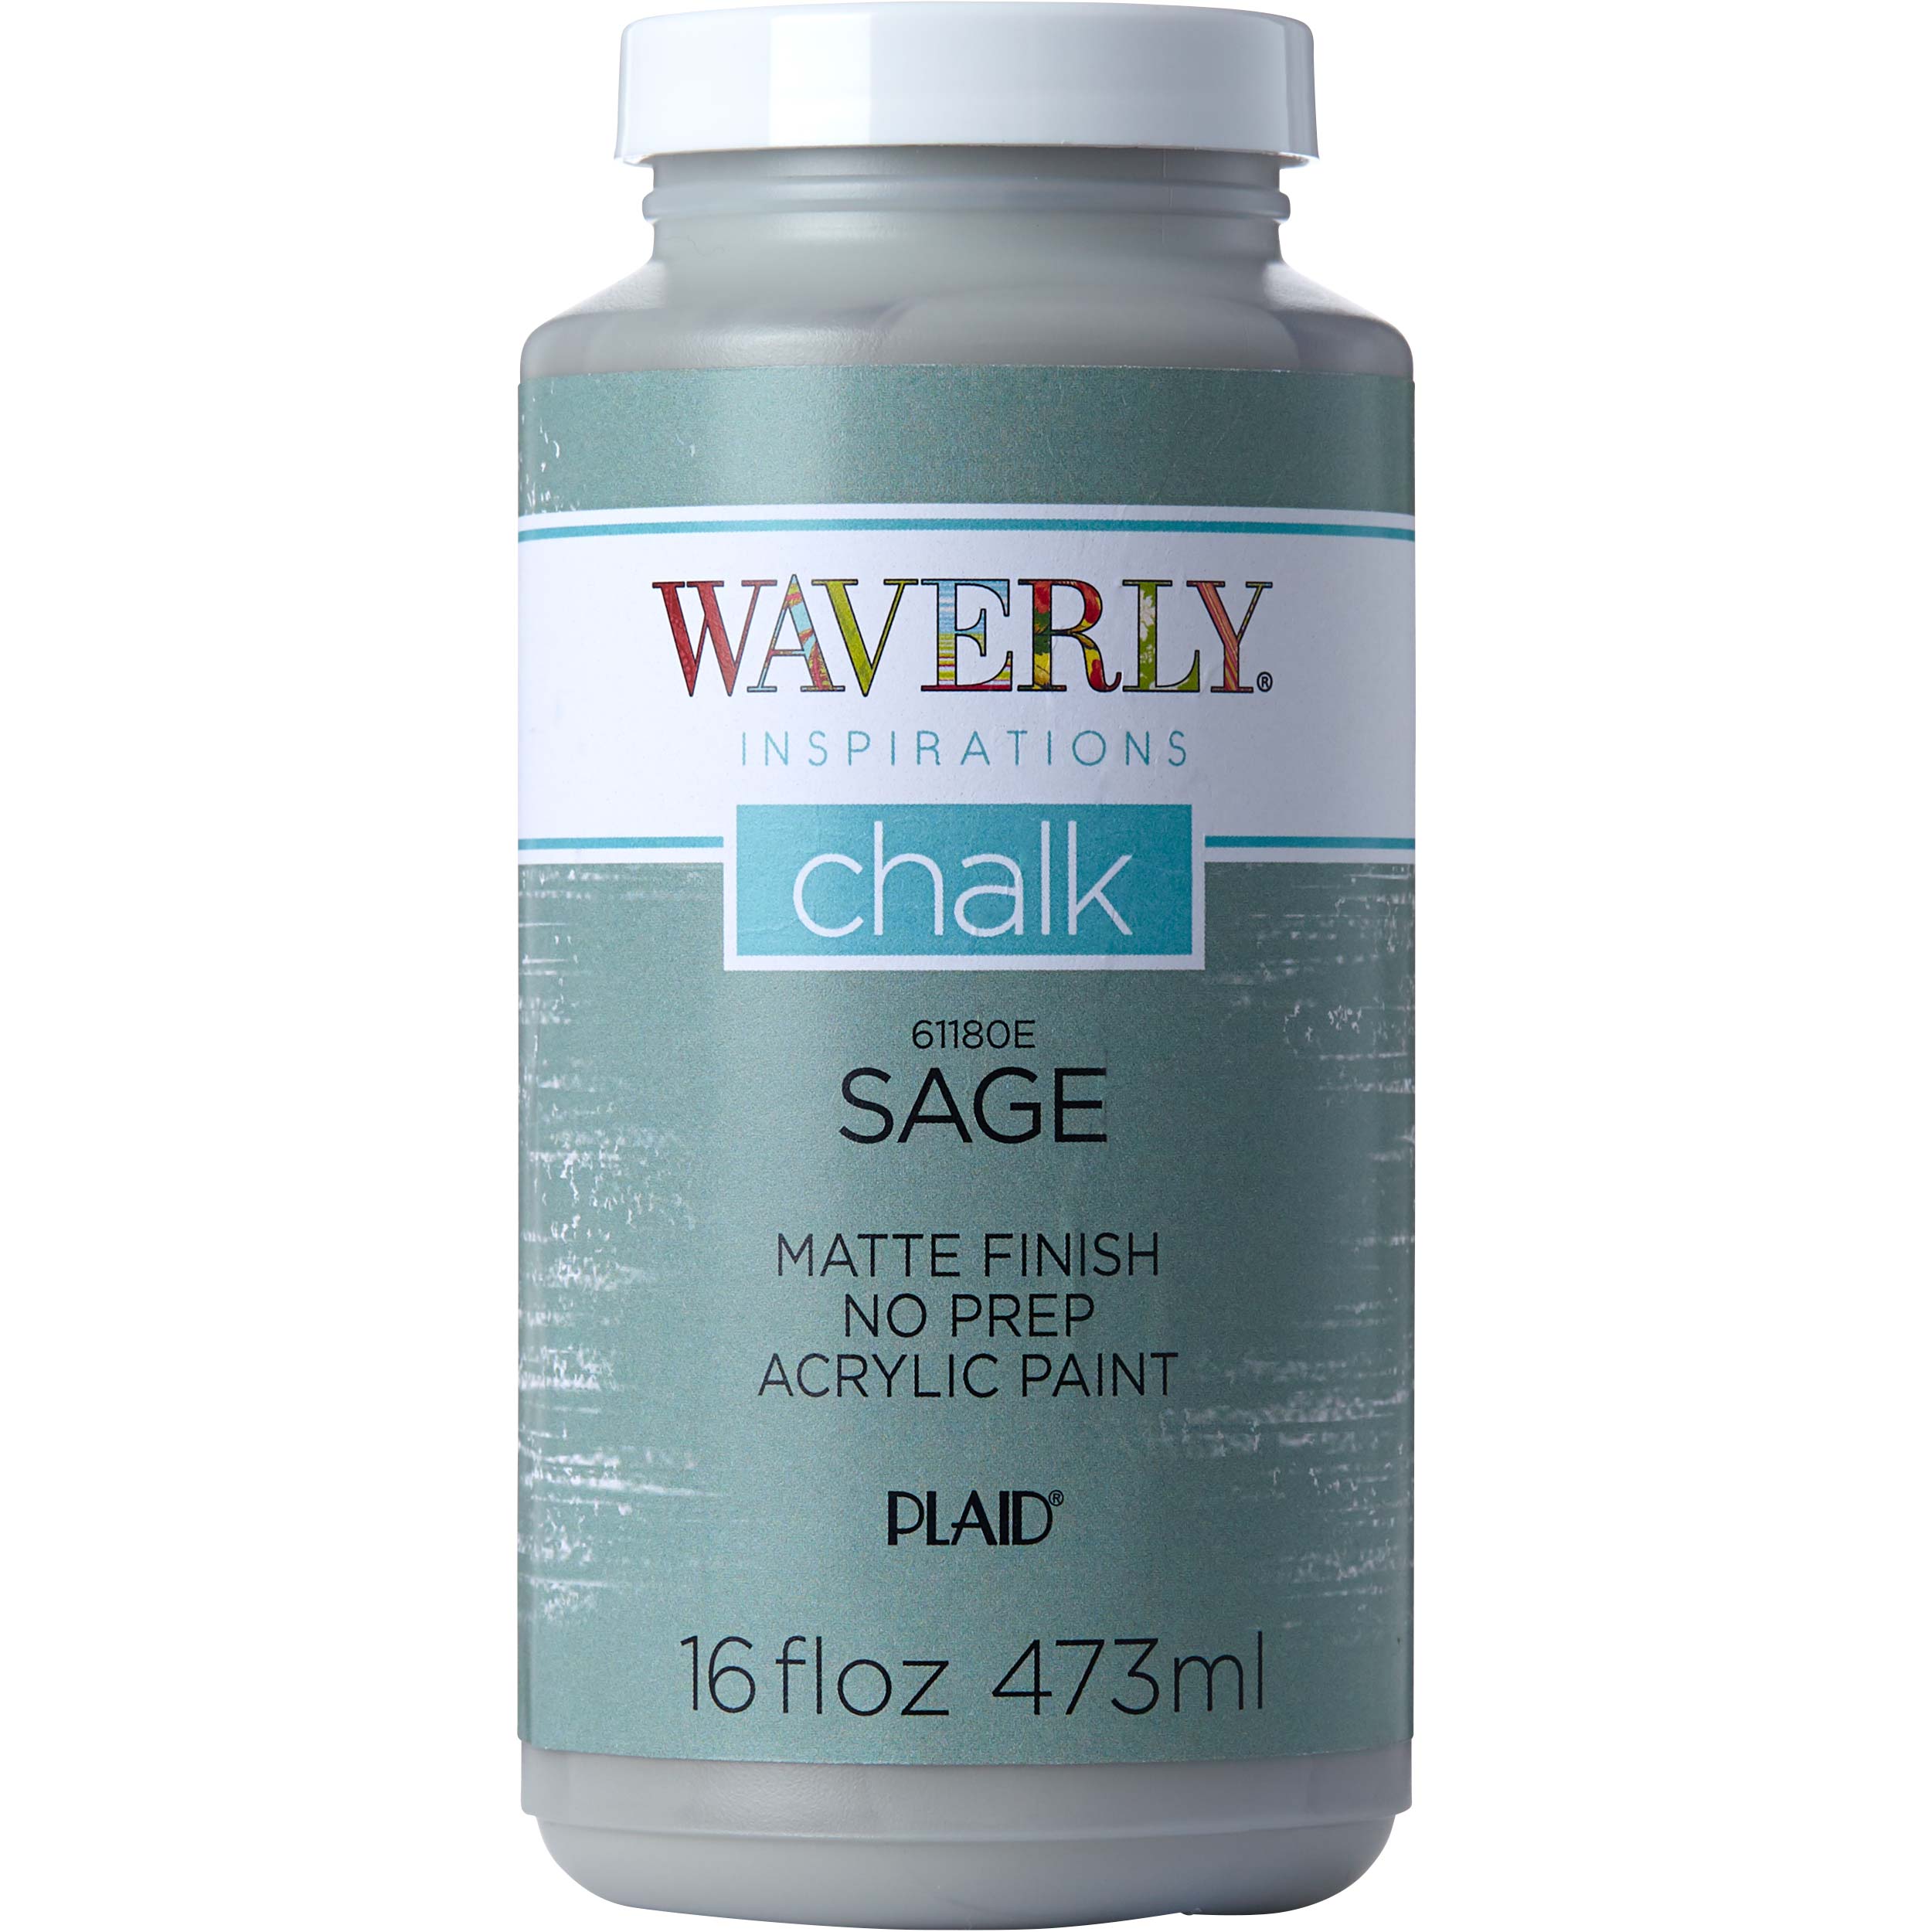 Waverly ® Inspirations Chalk Finish Acrylic Paint - Sage, 16 oz. - 61180E